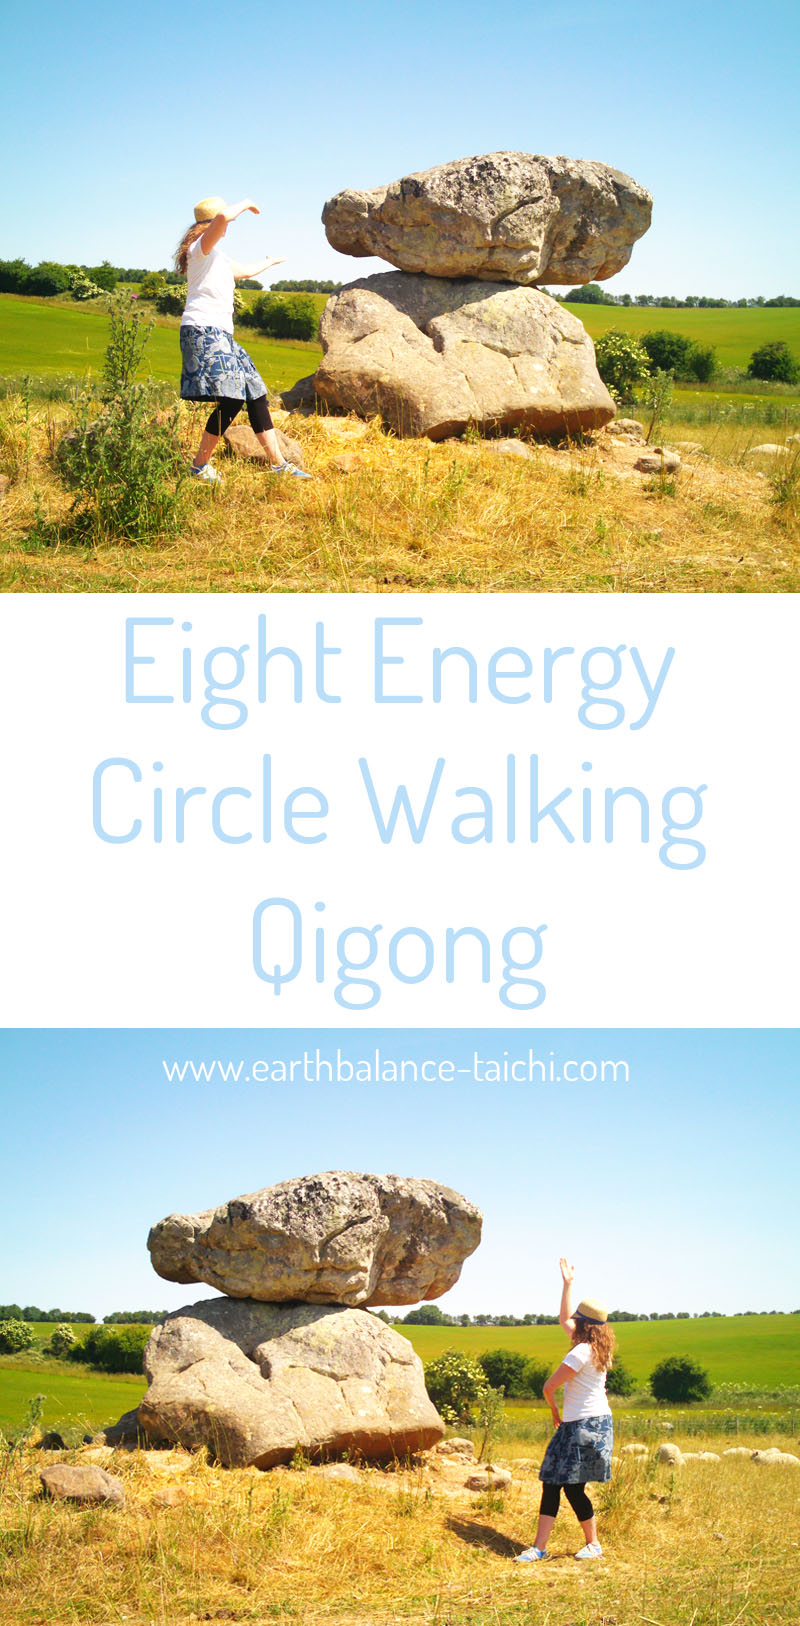 Eight Energy Circle Walking Qigong